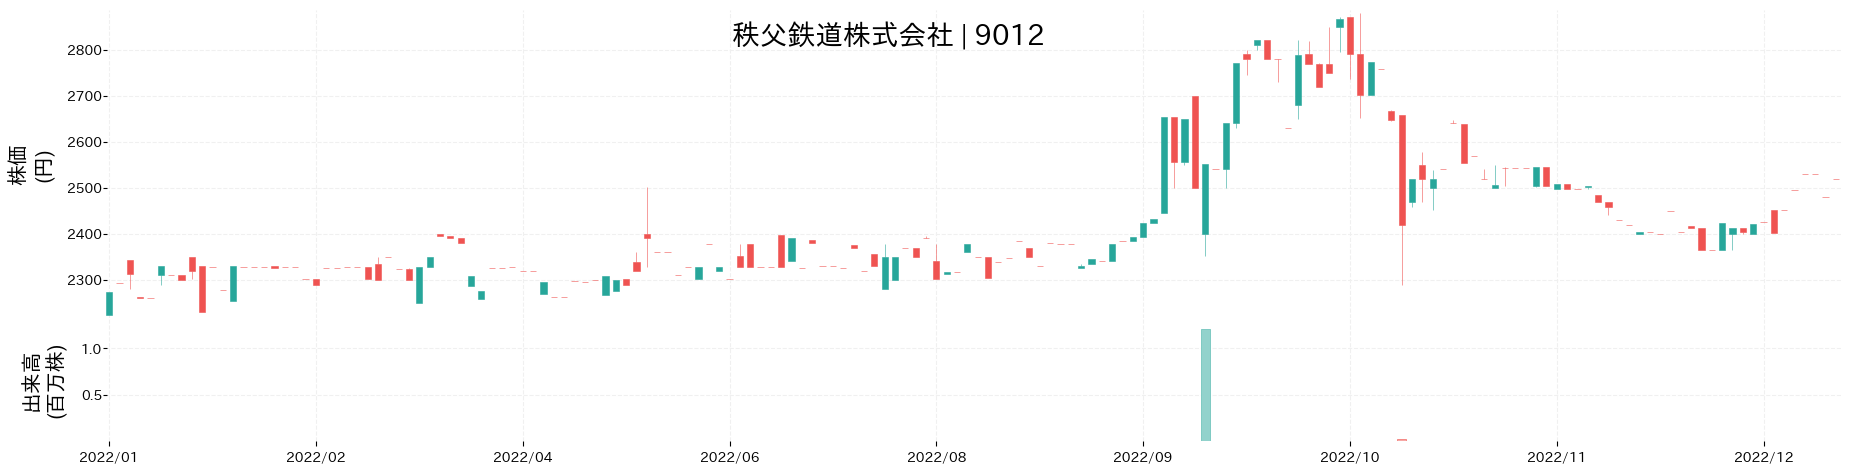 秩父鉄道の株価推移(2022)